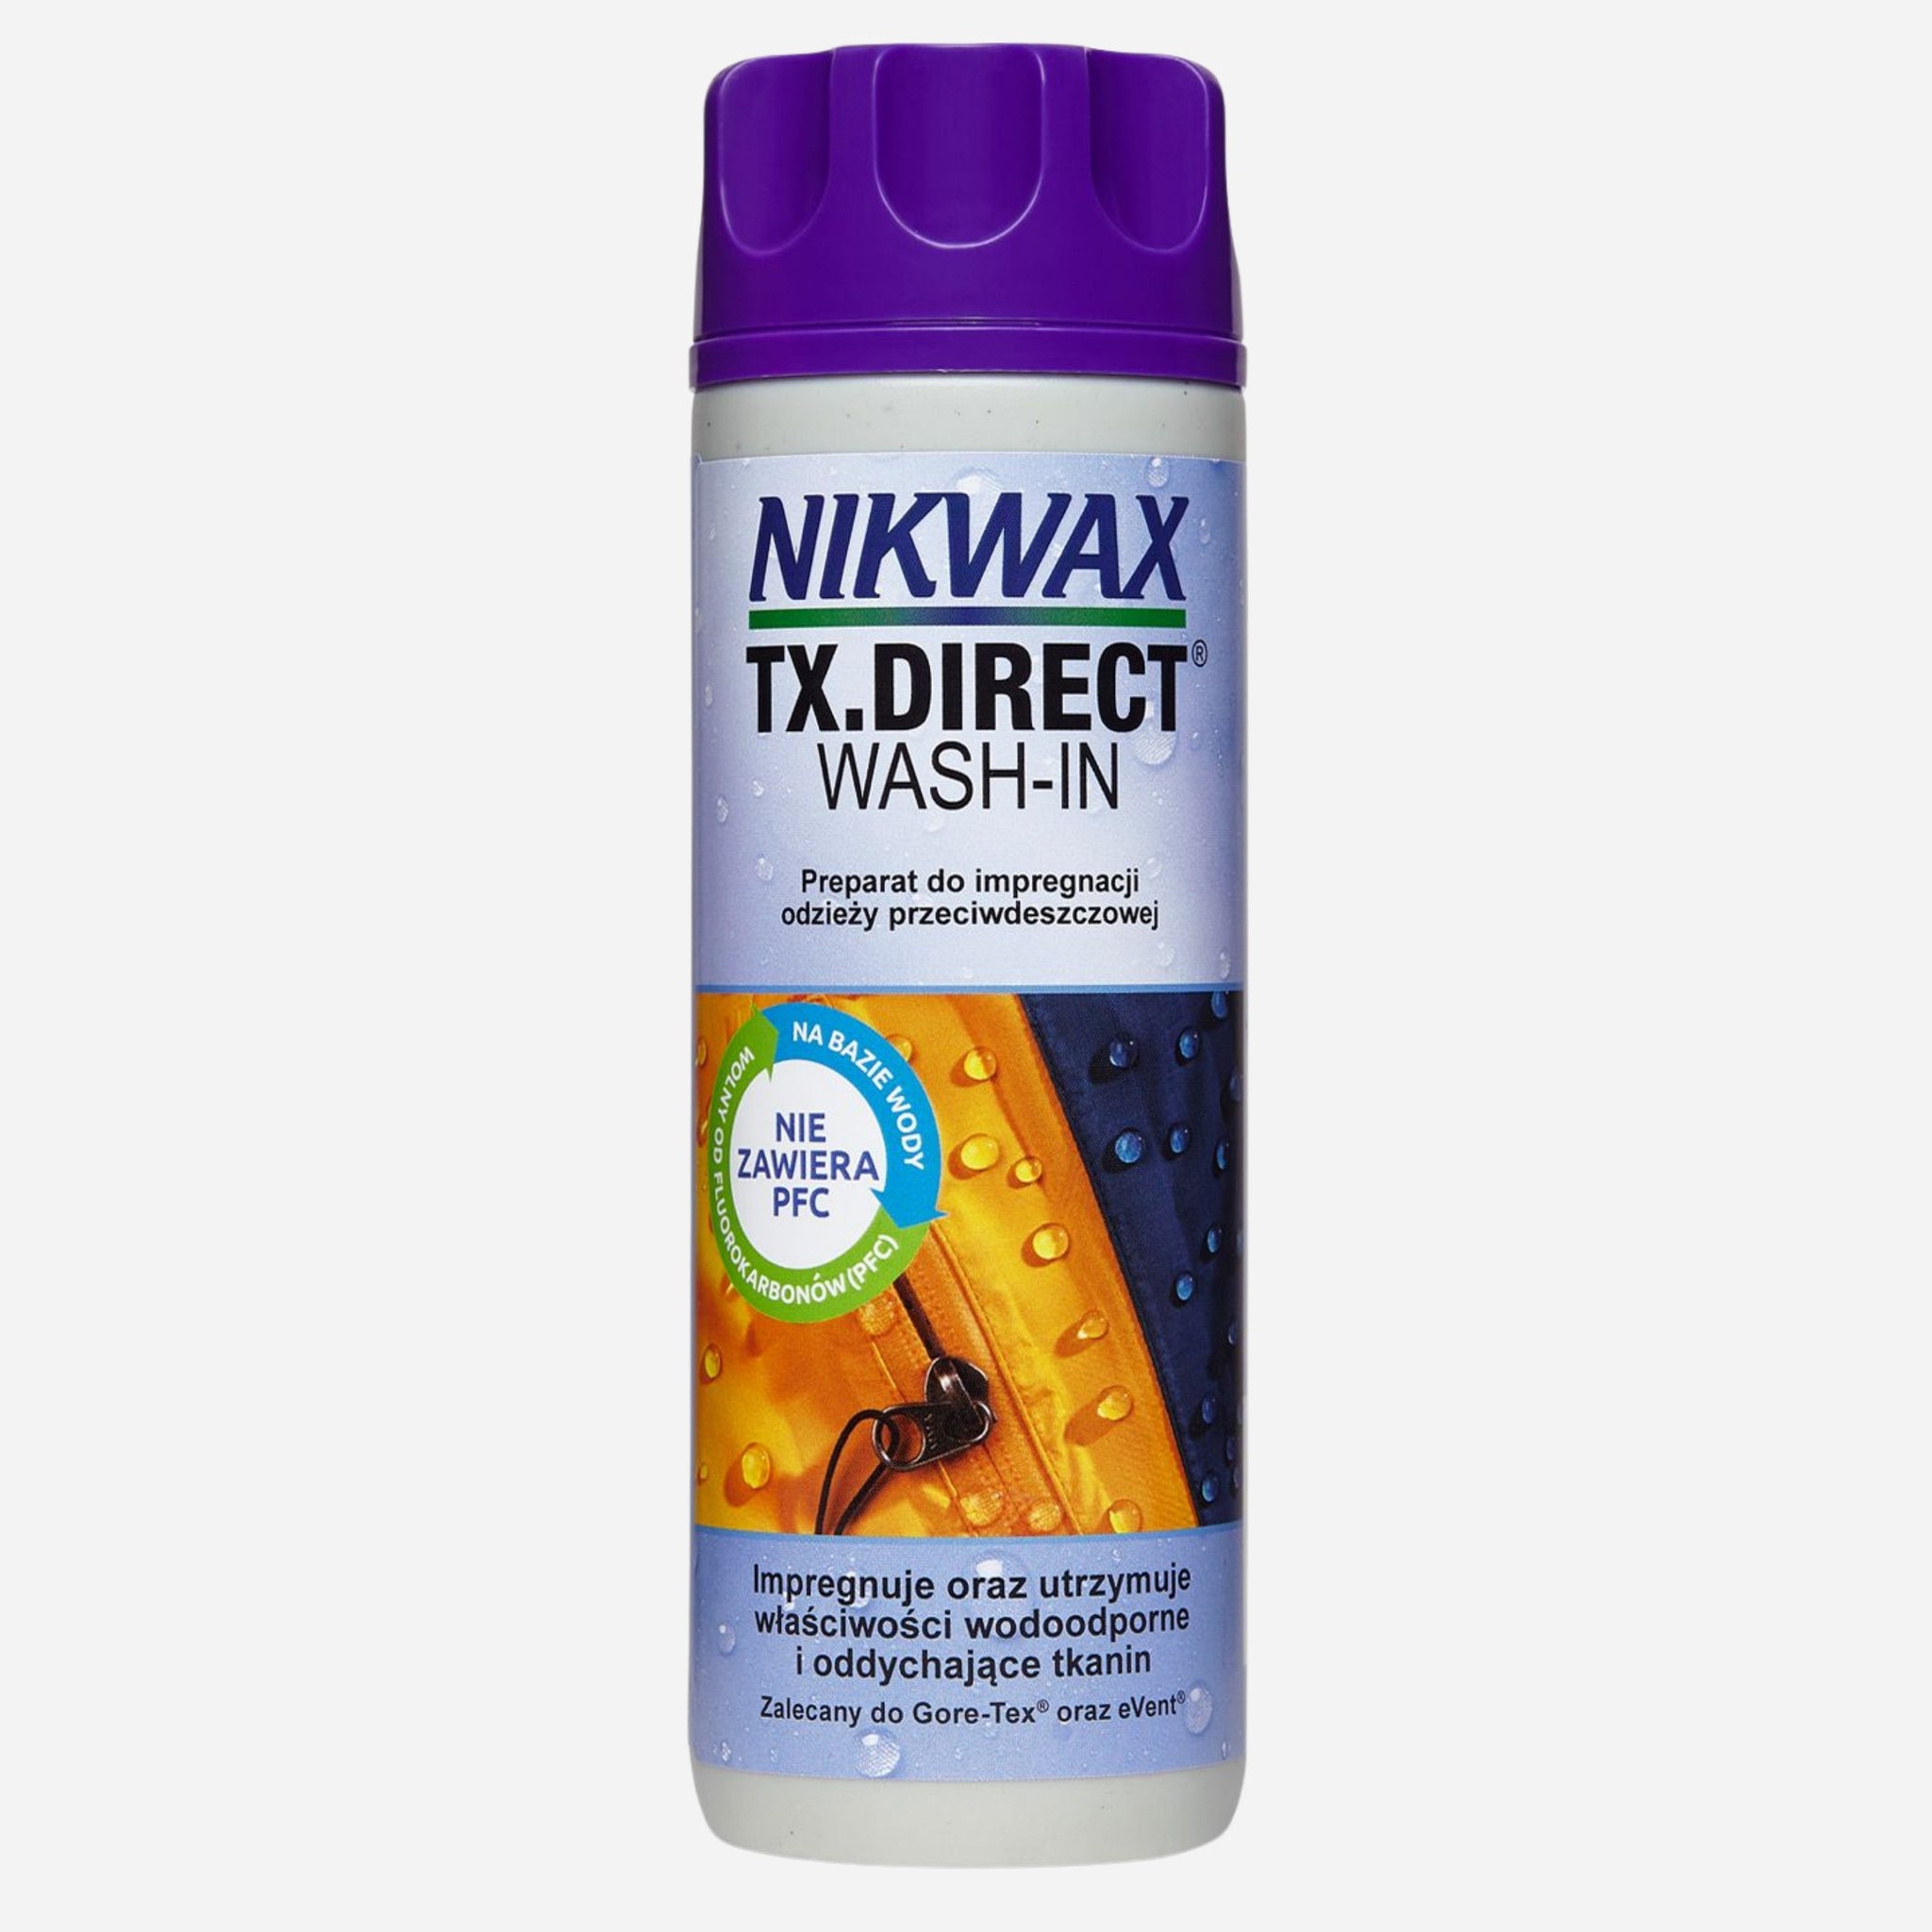 Nikwax - TX.Direct® Wash-In 300ml Просочення для одягу